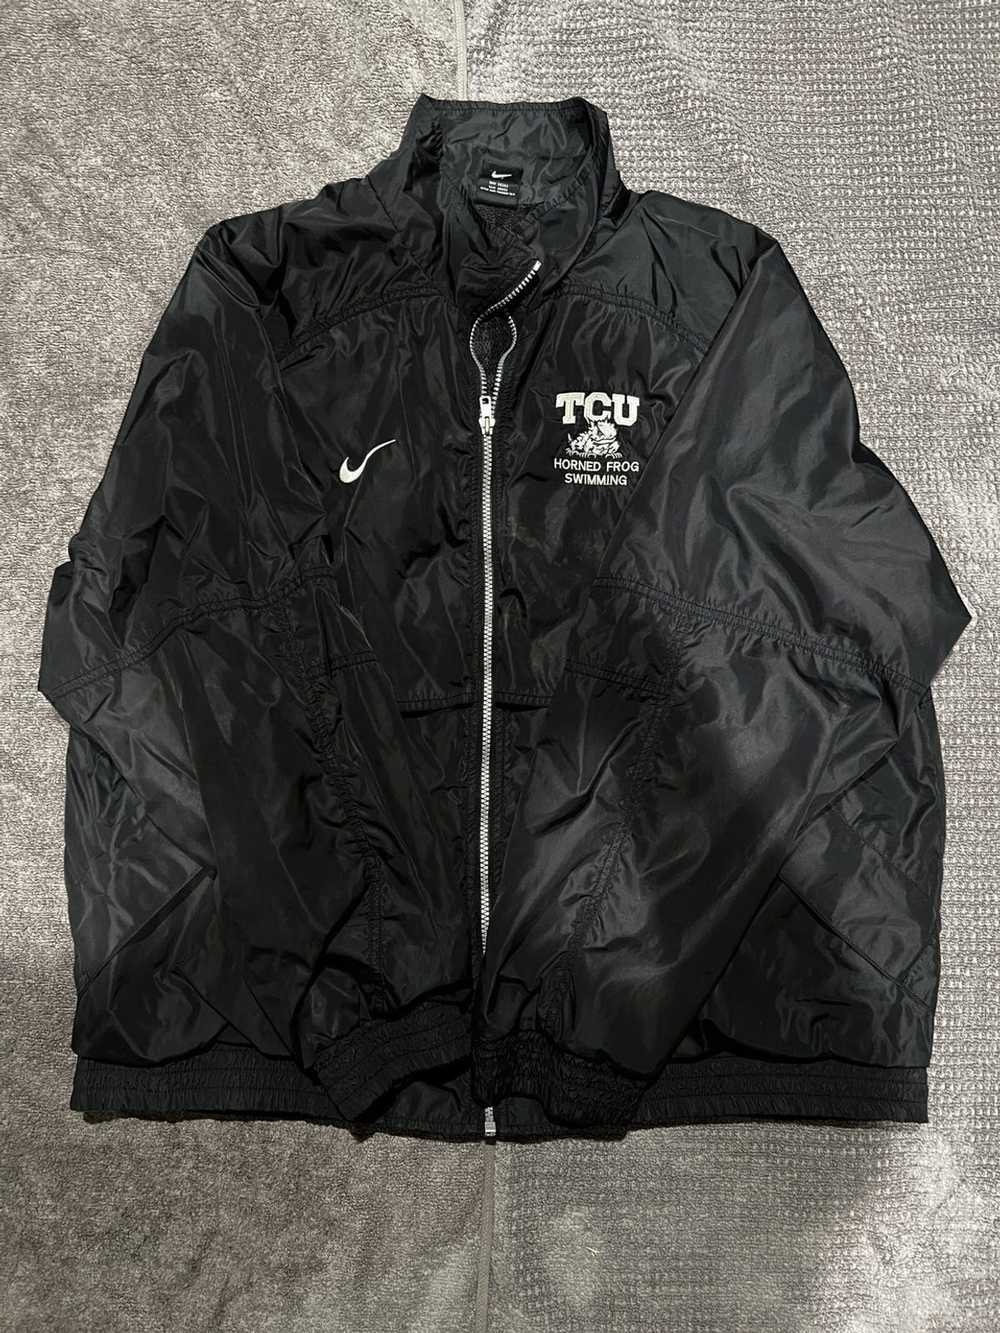 Nike TCU Nike Rain Coat - image 1